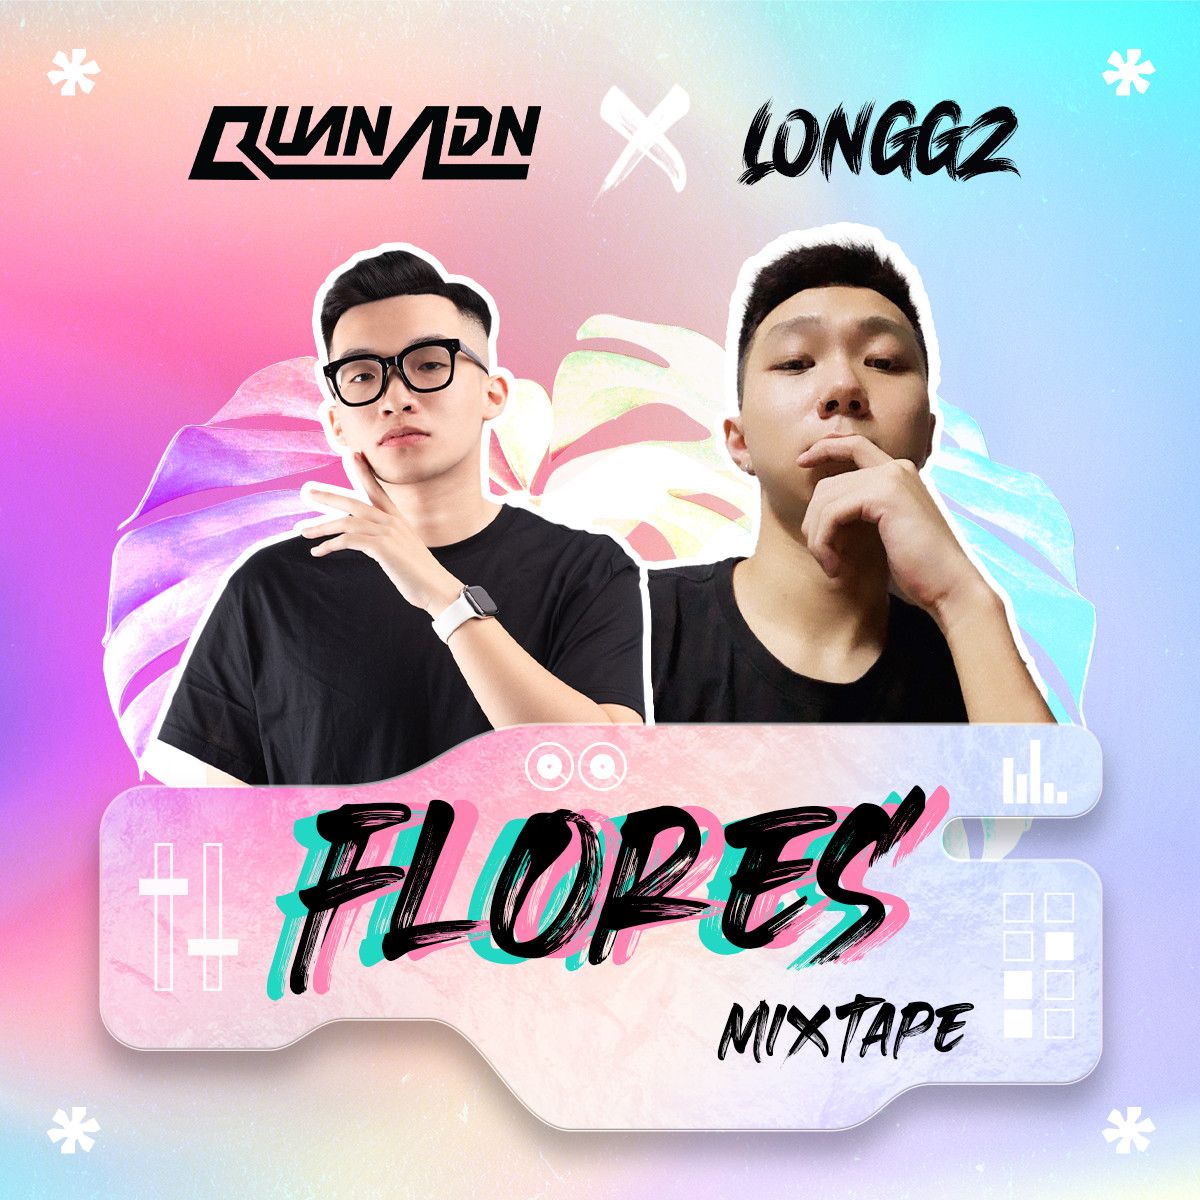 Soo dejiso Mixtape - Flores by Quan ADN & LONGGZ